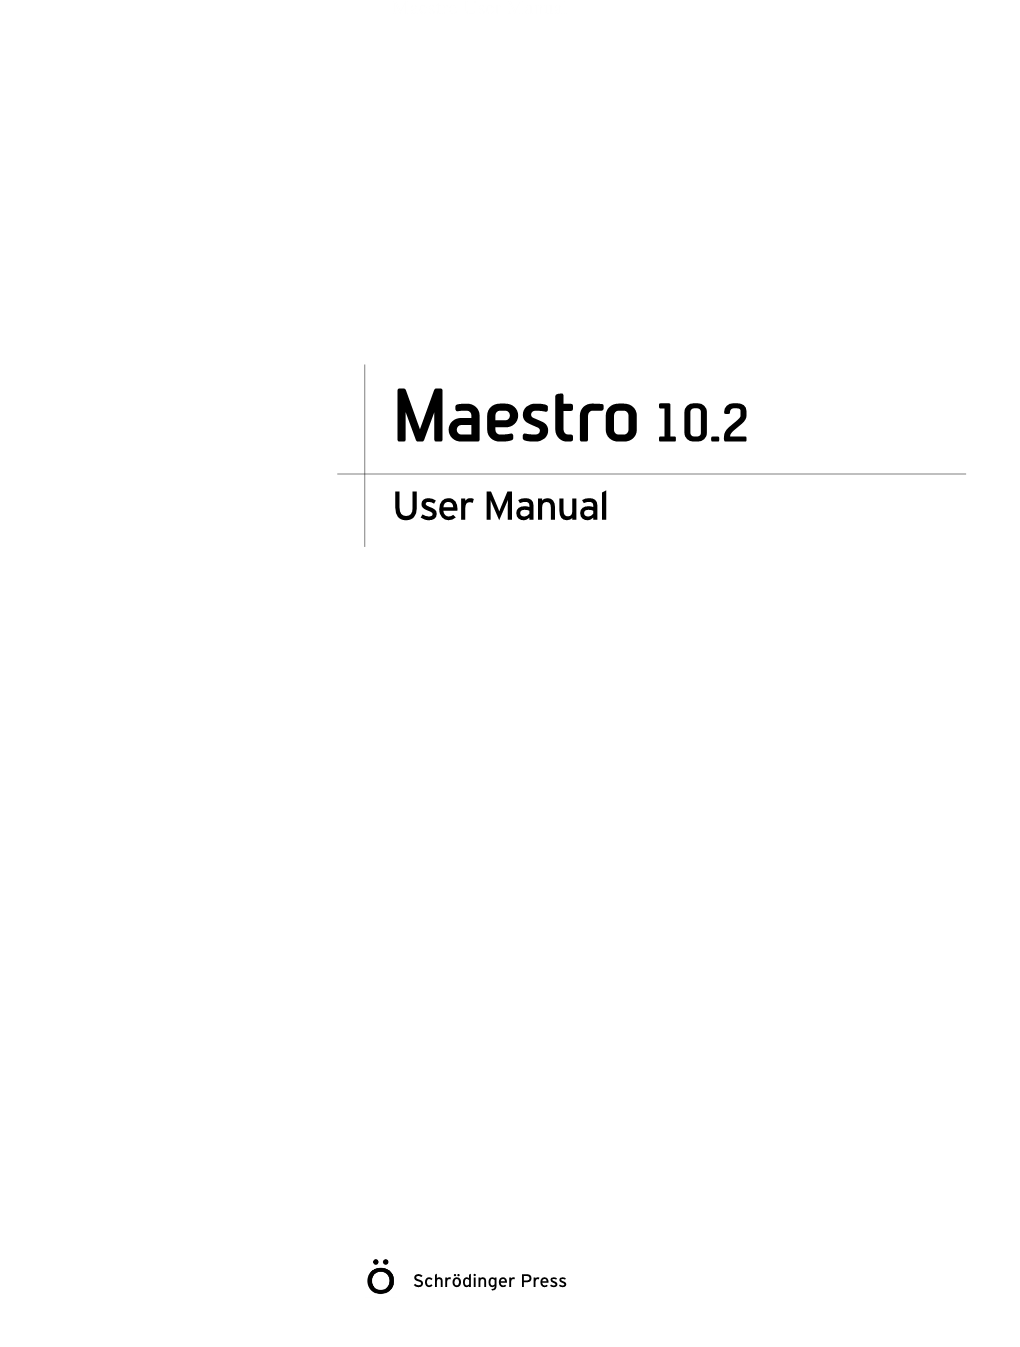 Maestro 10.2 User Manual